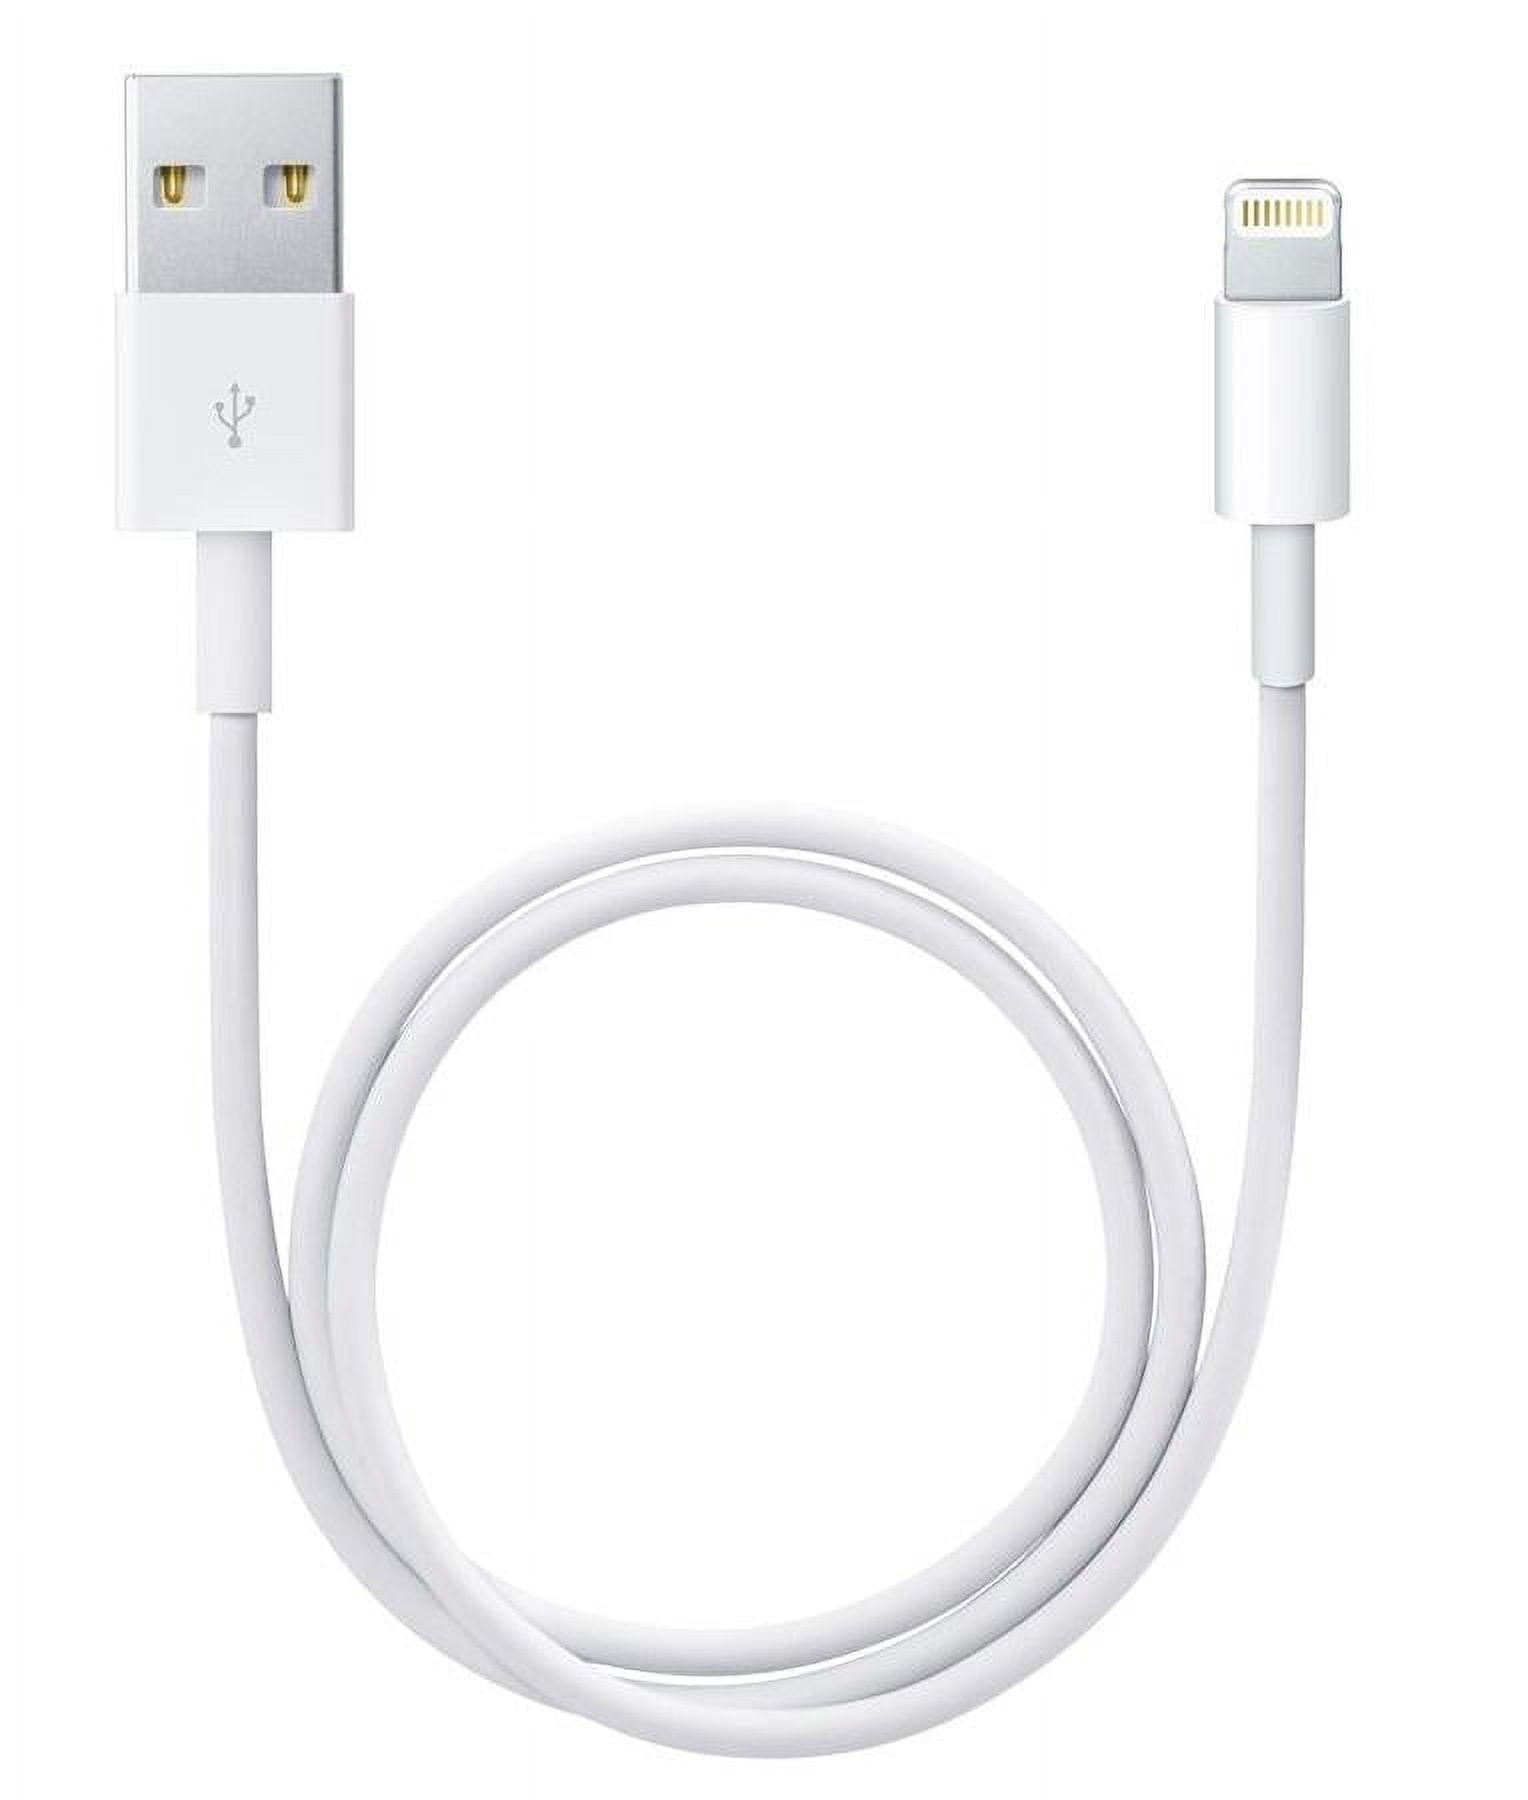 Apple 5W USB Power Adapter - White (MD810LL/A) (New, Bulk Packaging) 